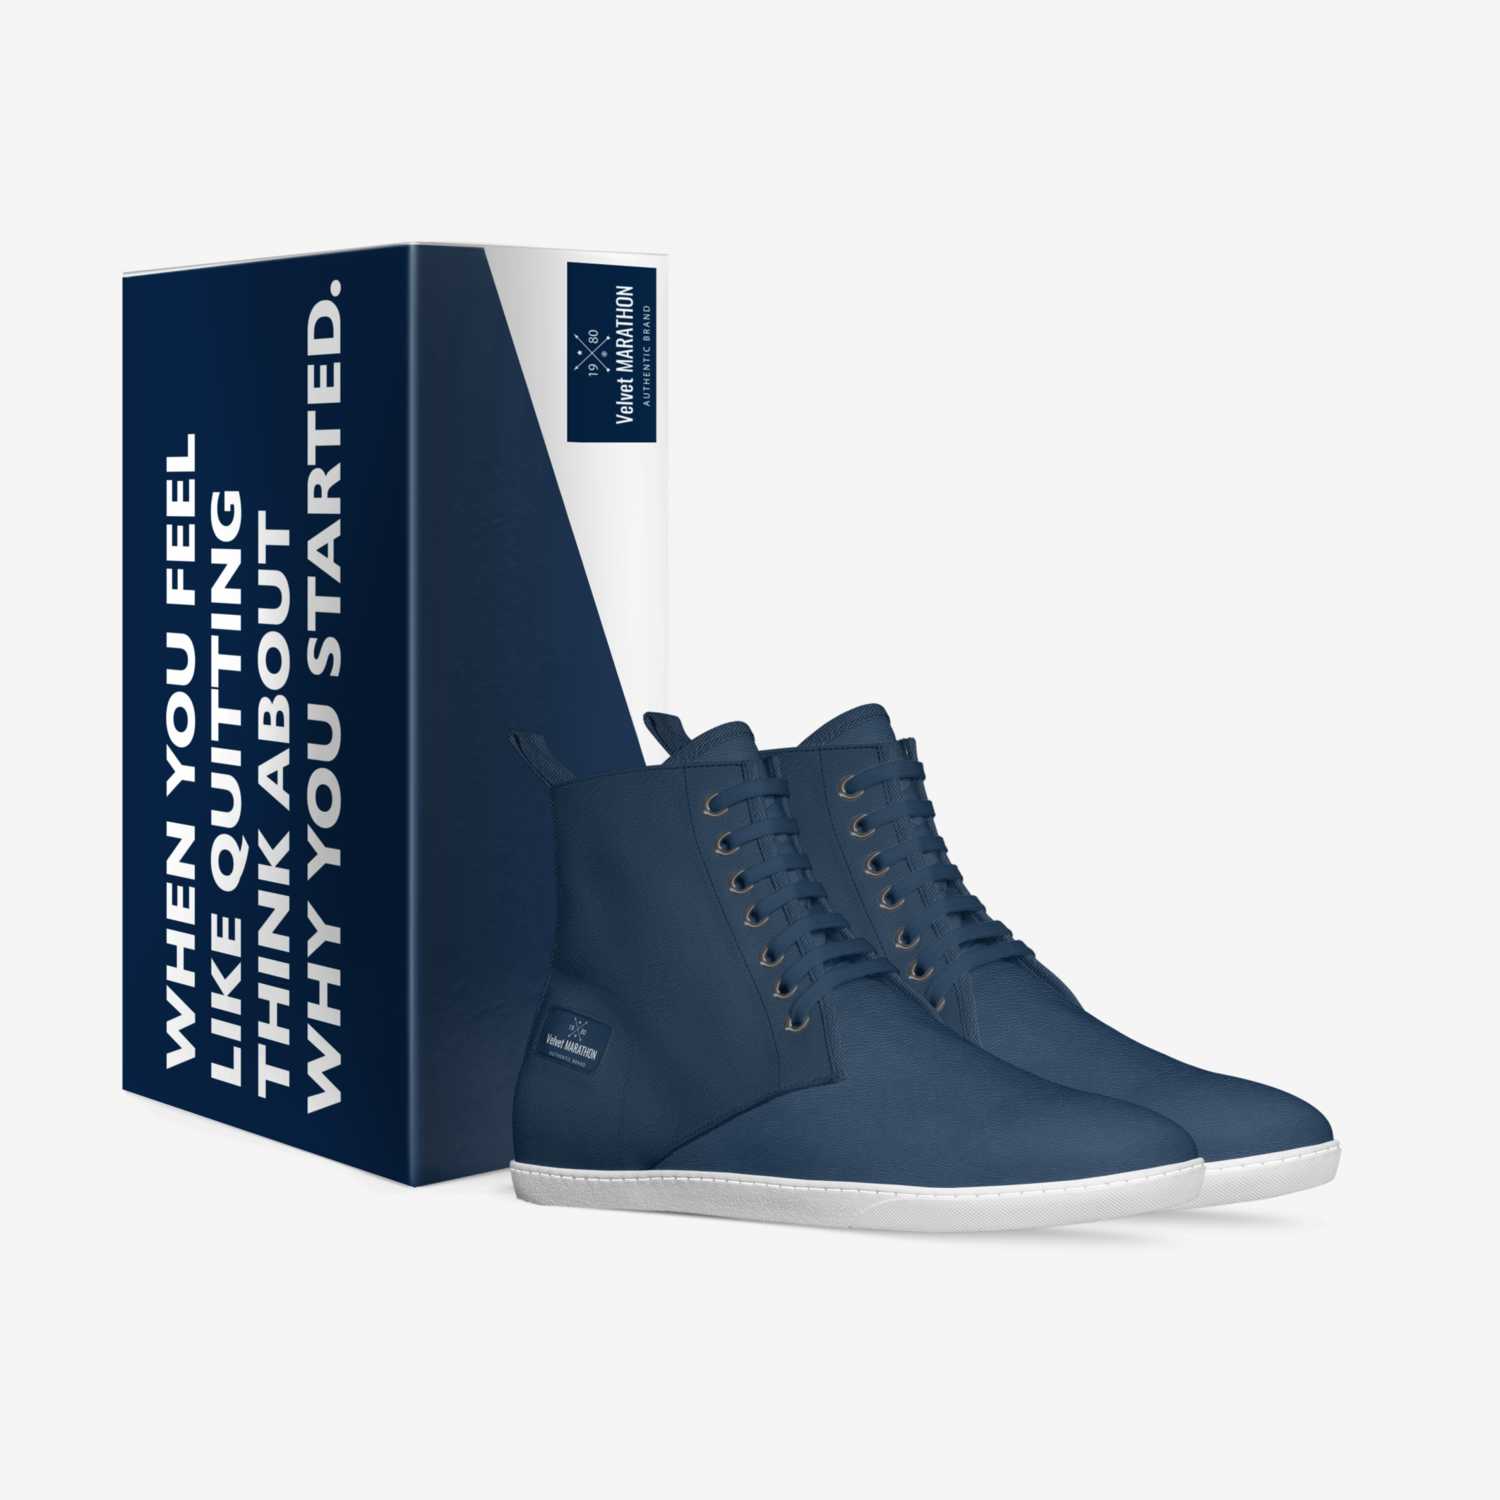 Velvet MARATHON custom made in Italy shoes by Shantae Esannason | Box view